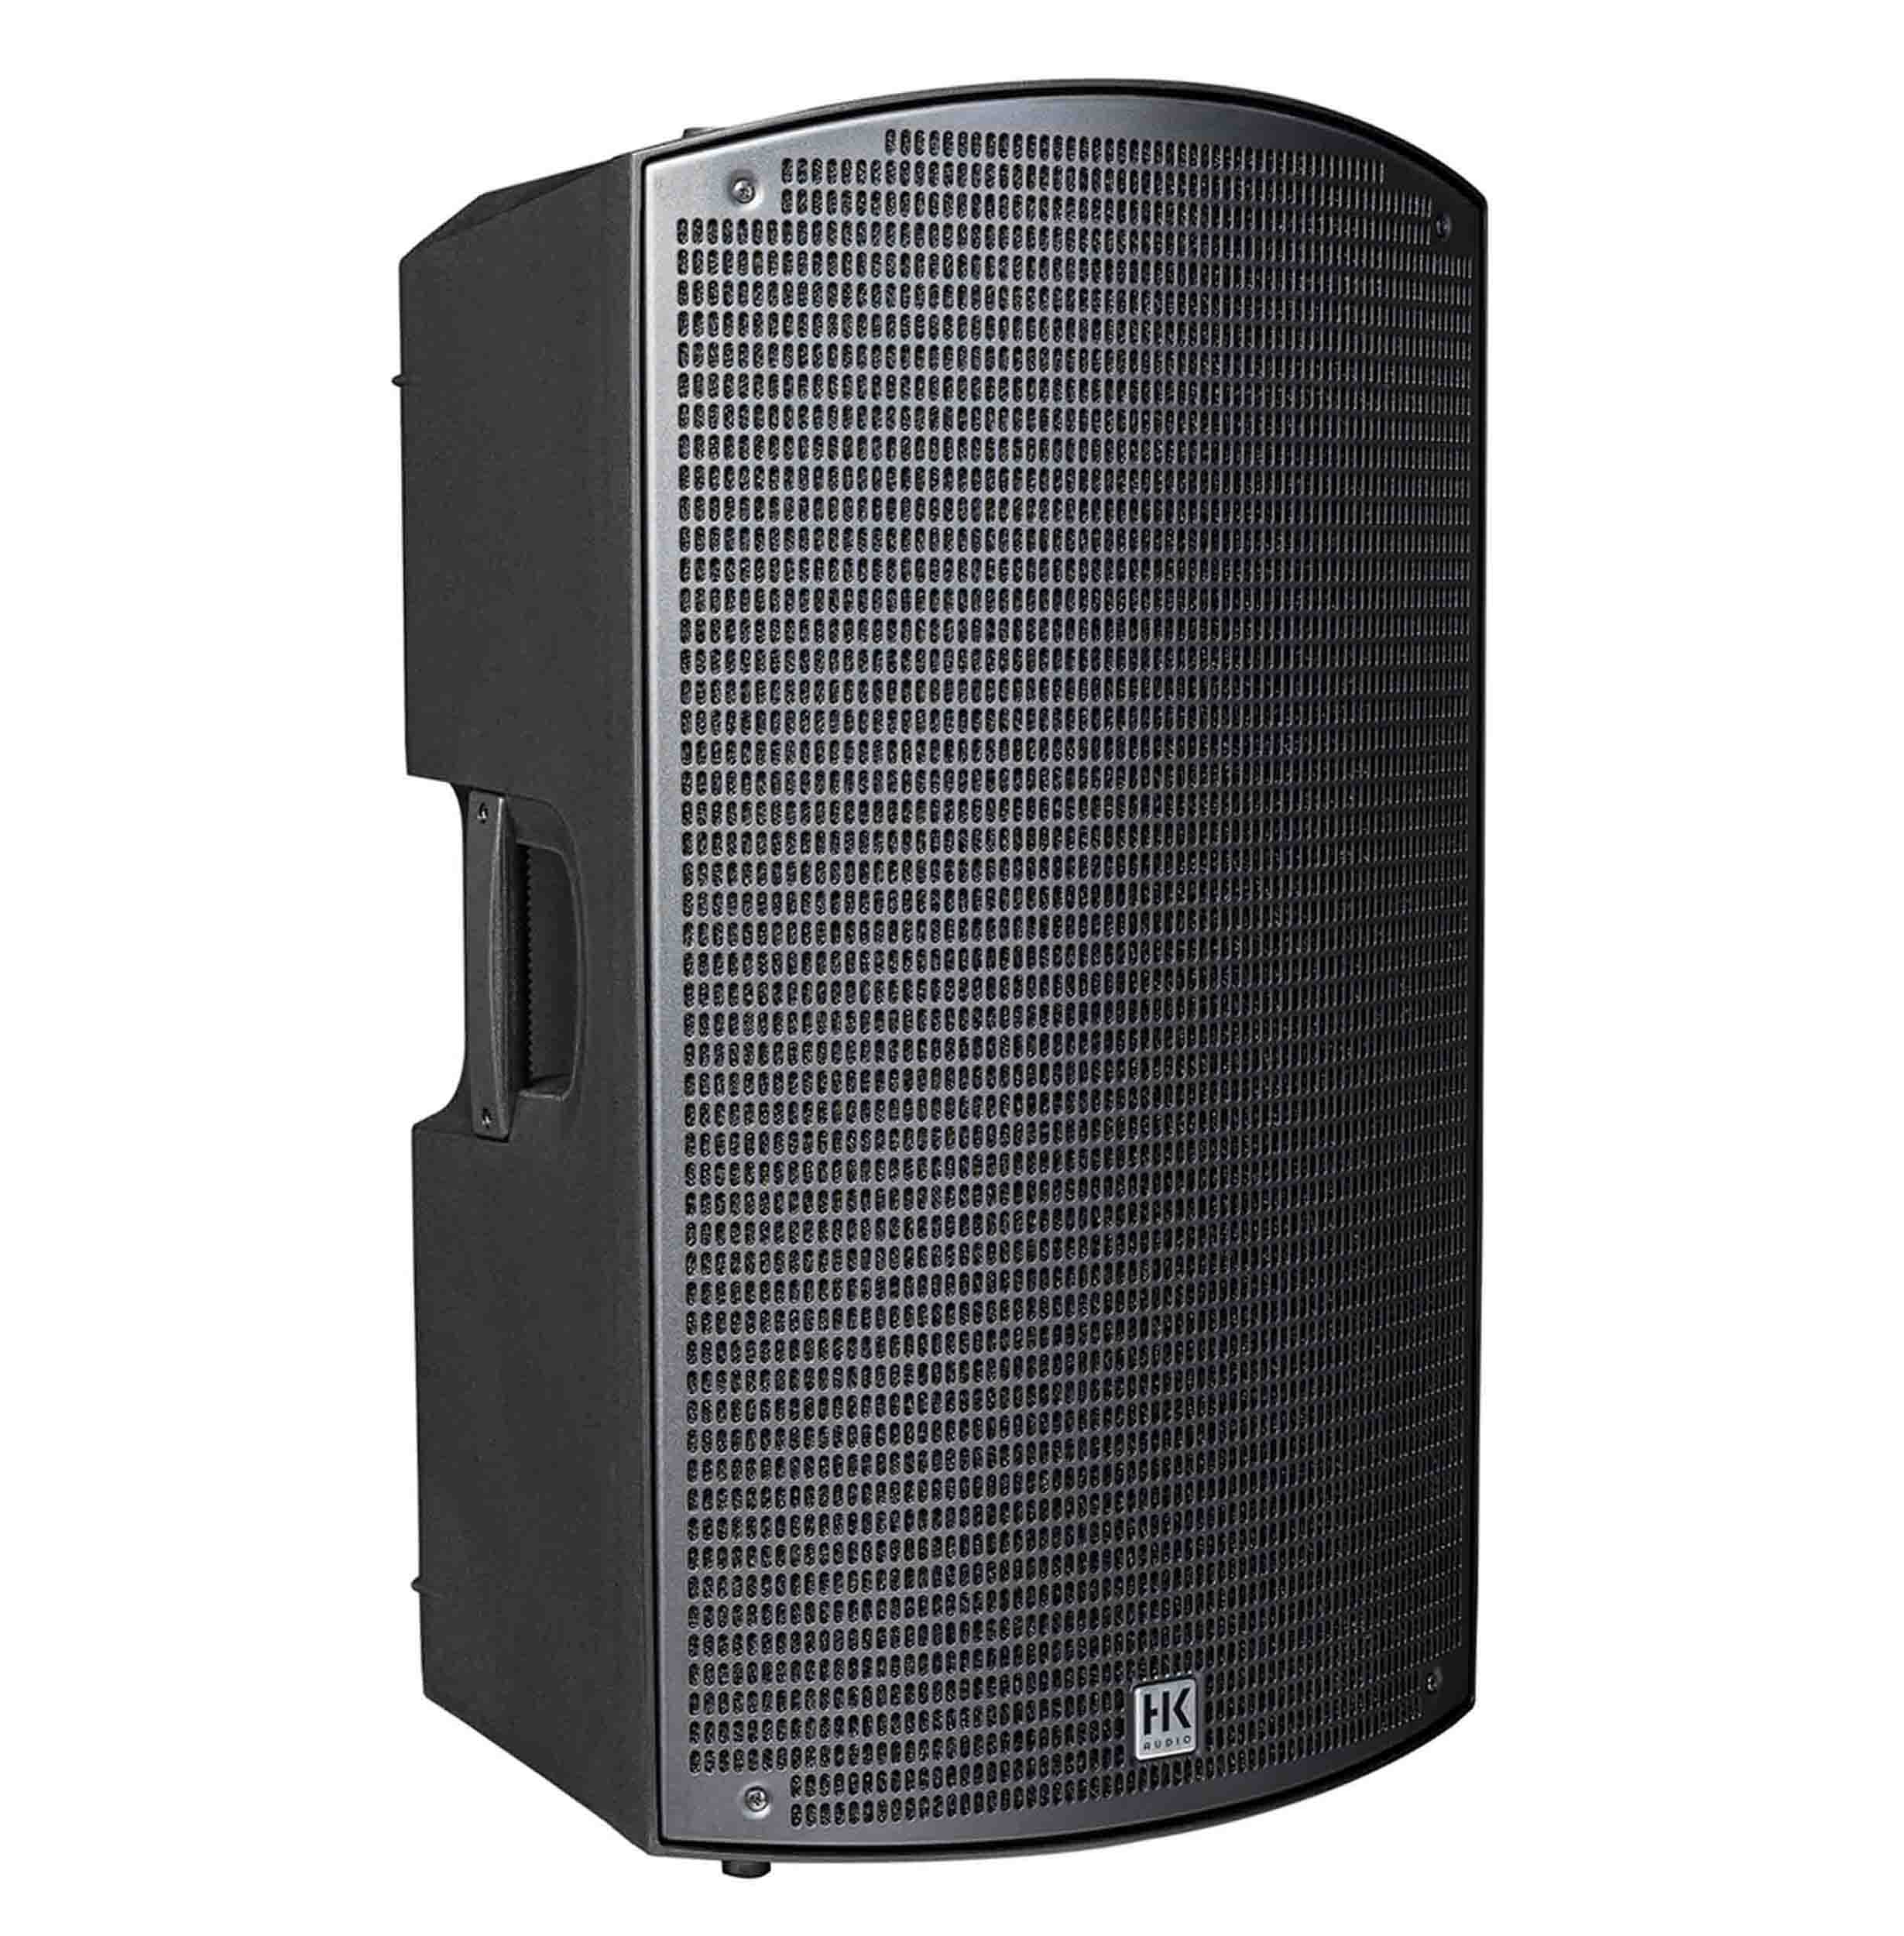 HK Audio SONAR115XI, 2-Way 1200W 15-Inch Active Powered Speaker - Hollywood DJ